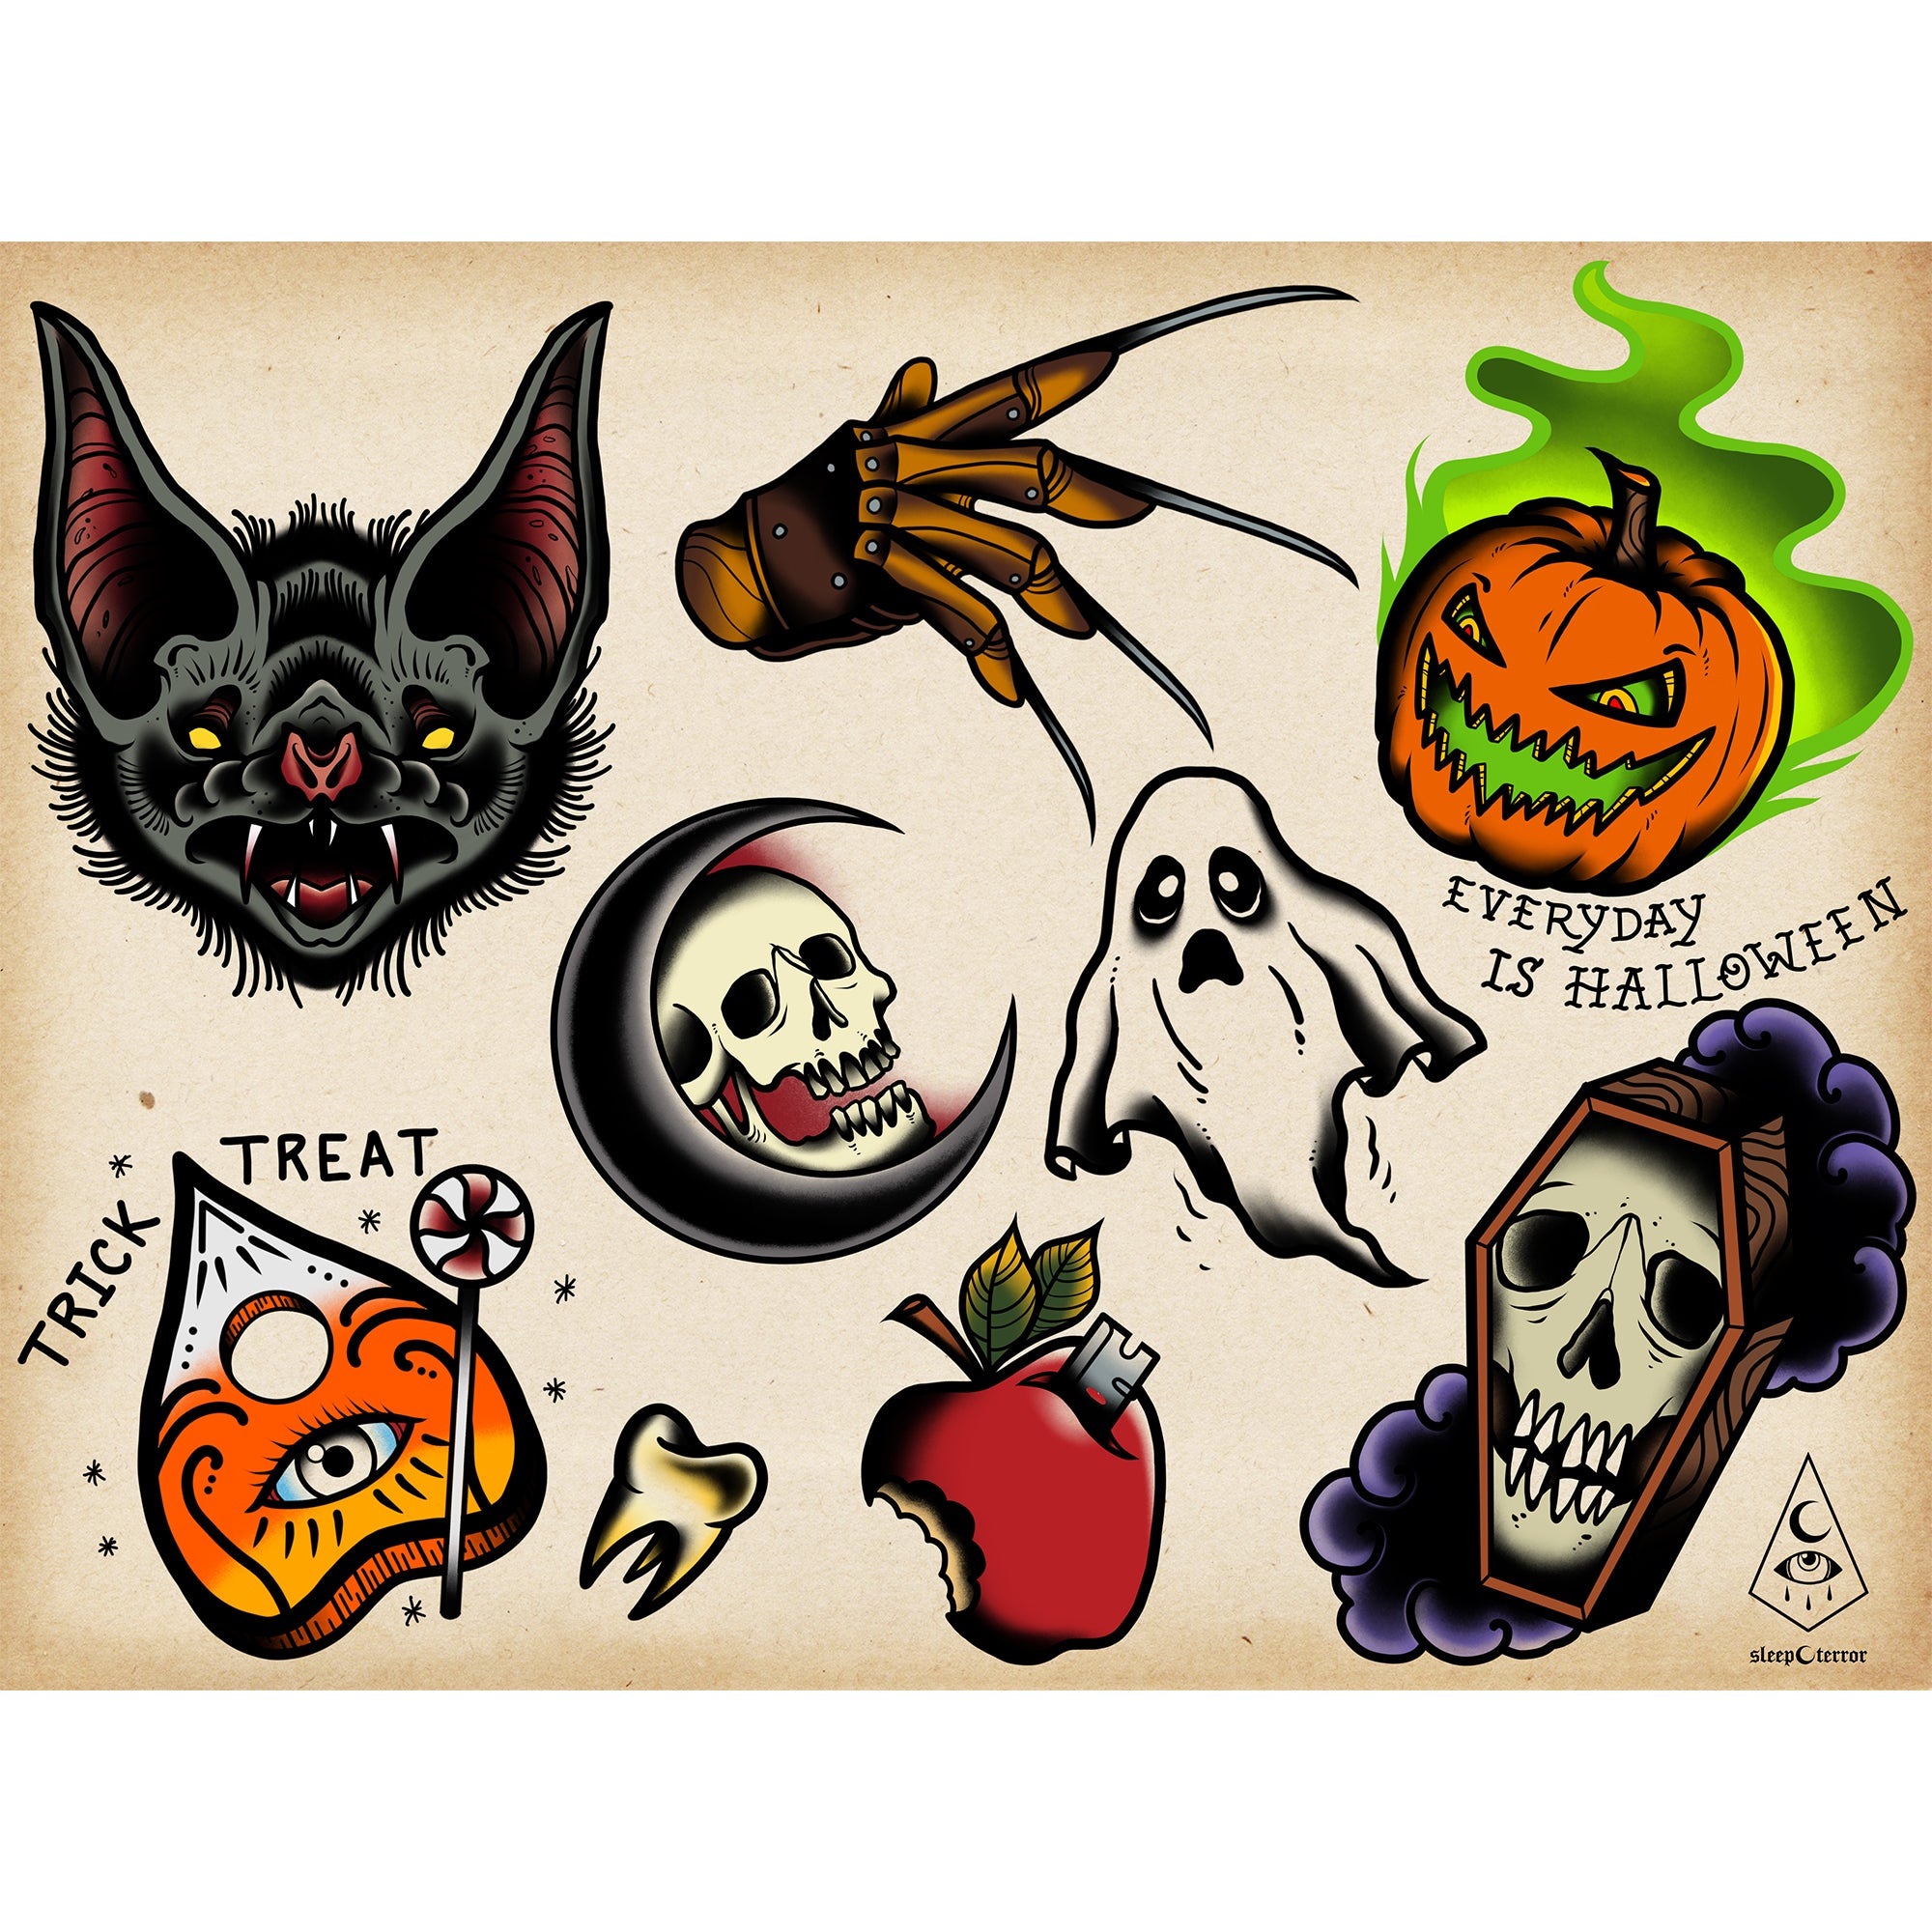 Lsly en Twitter Halloween tattoo flash Its never too early halloween  tattooflash halloweenflash doodles spooky scythe planchette poision  bat pumpkin illustration httpstcoHoSNsqULY1  Twitter